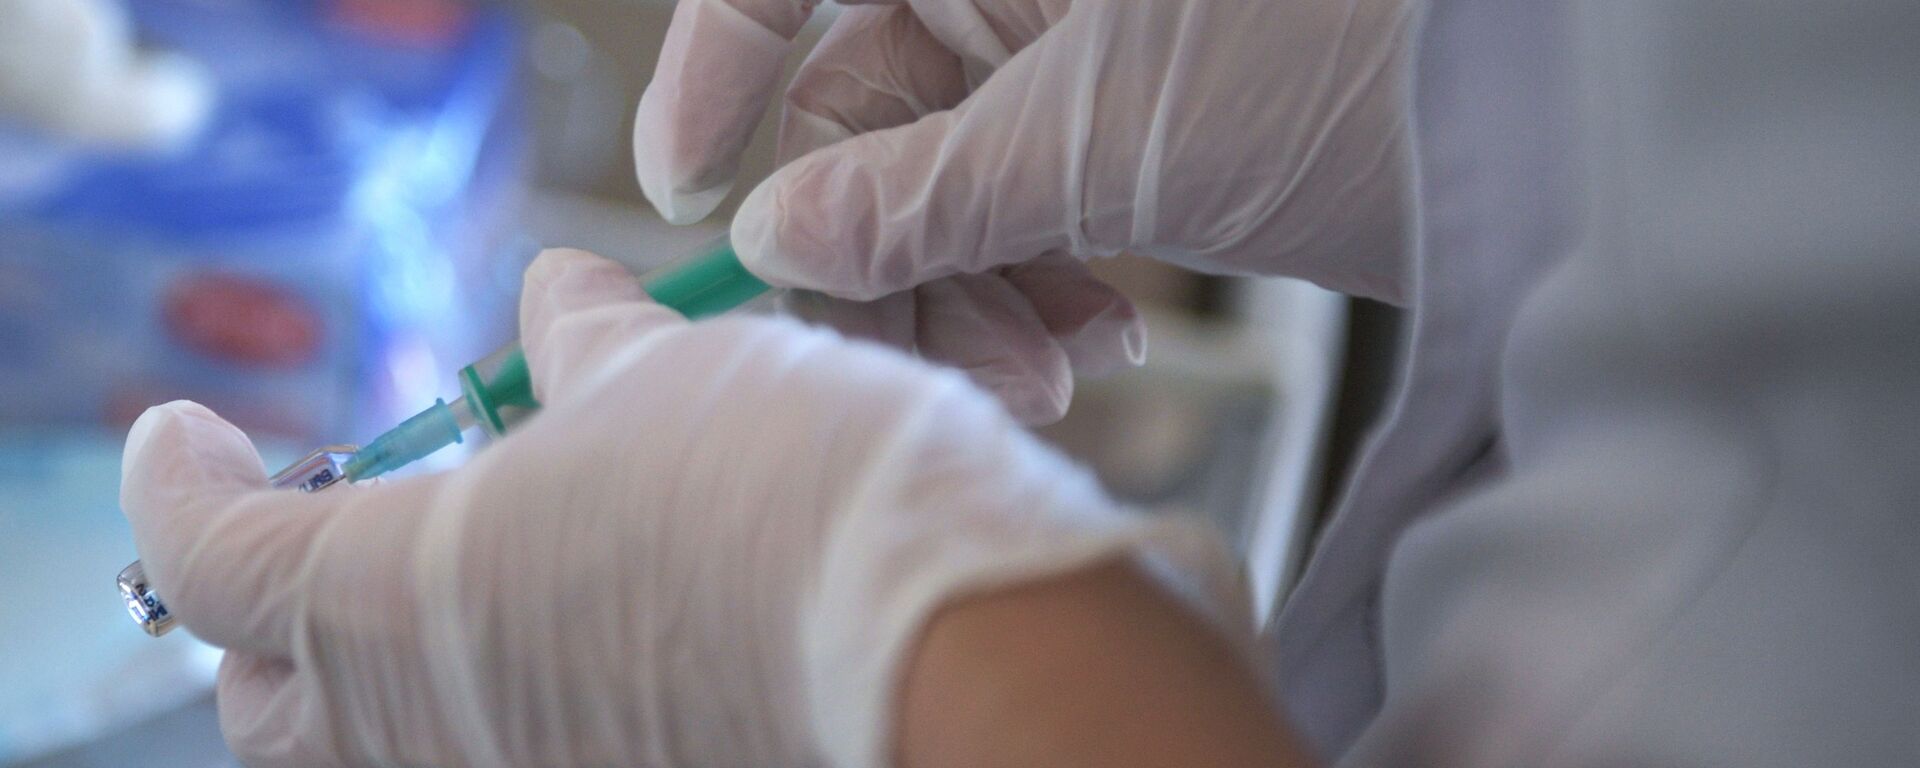 Медицинский работник производит вакцинацию от кори - Sputnik Արմենիա, 1920, 13.07.2021